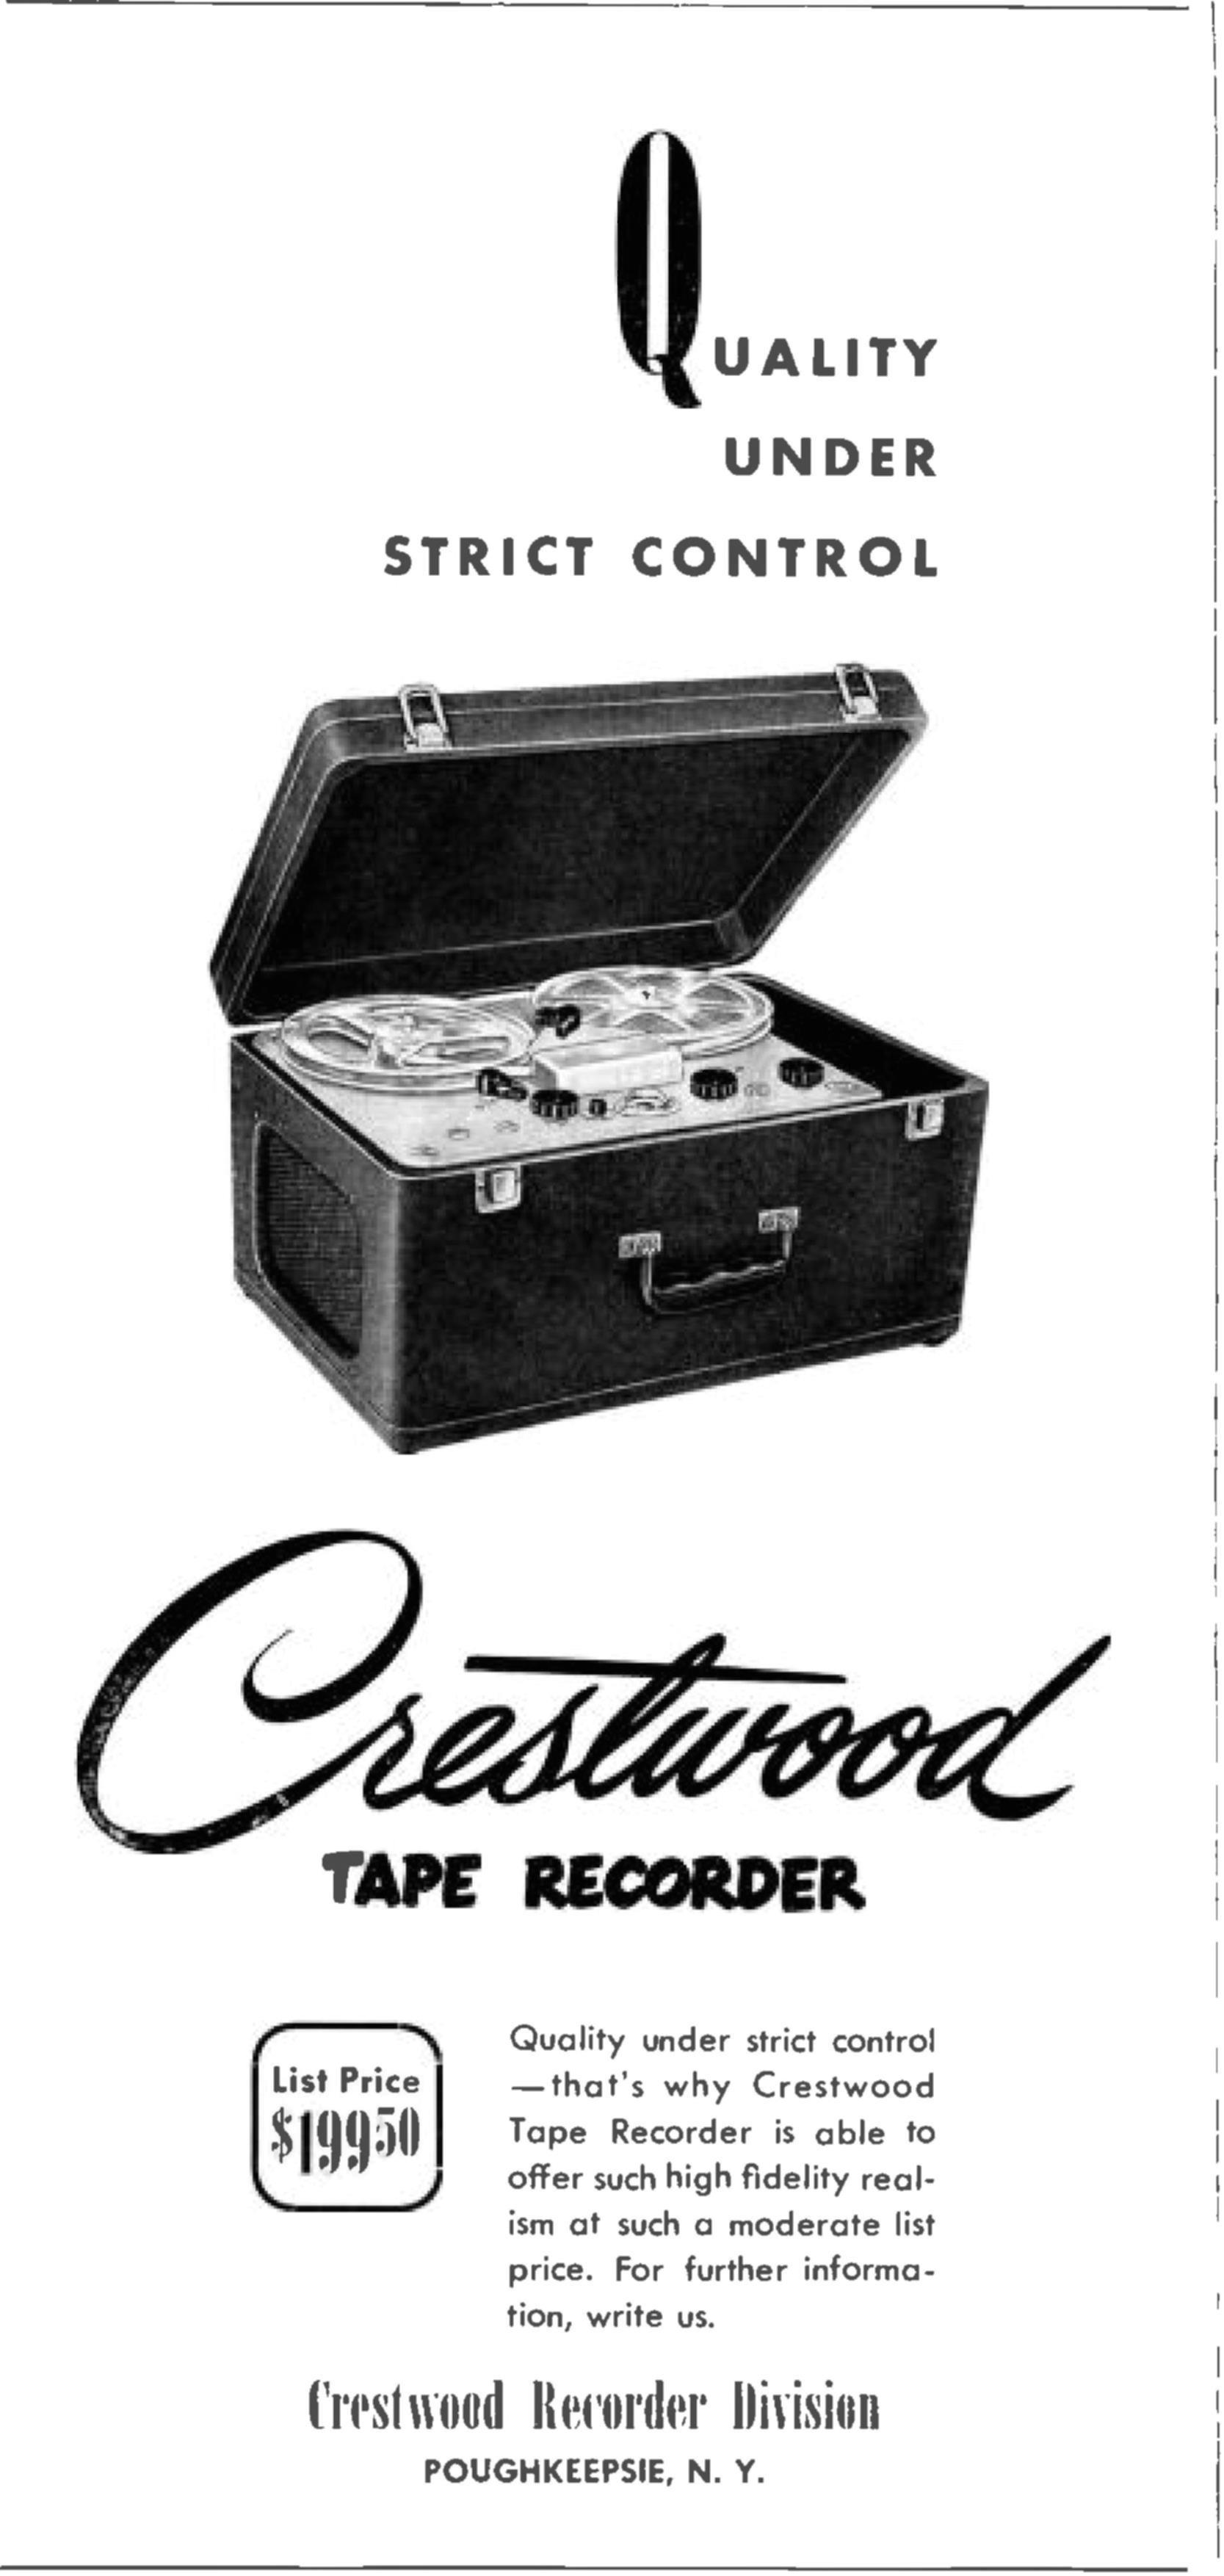 Crestwood 1953 200.jpg